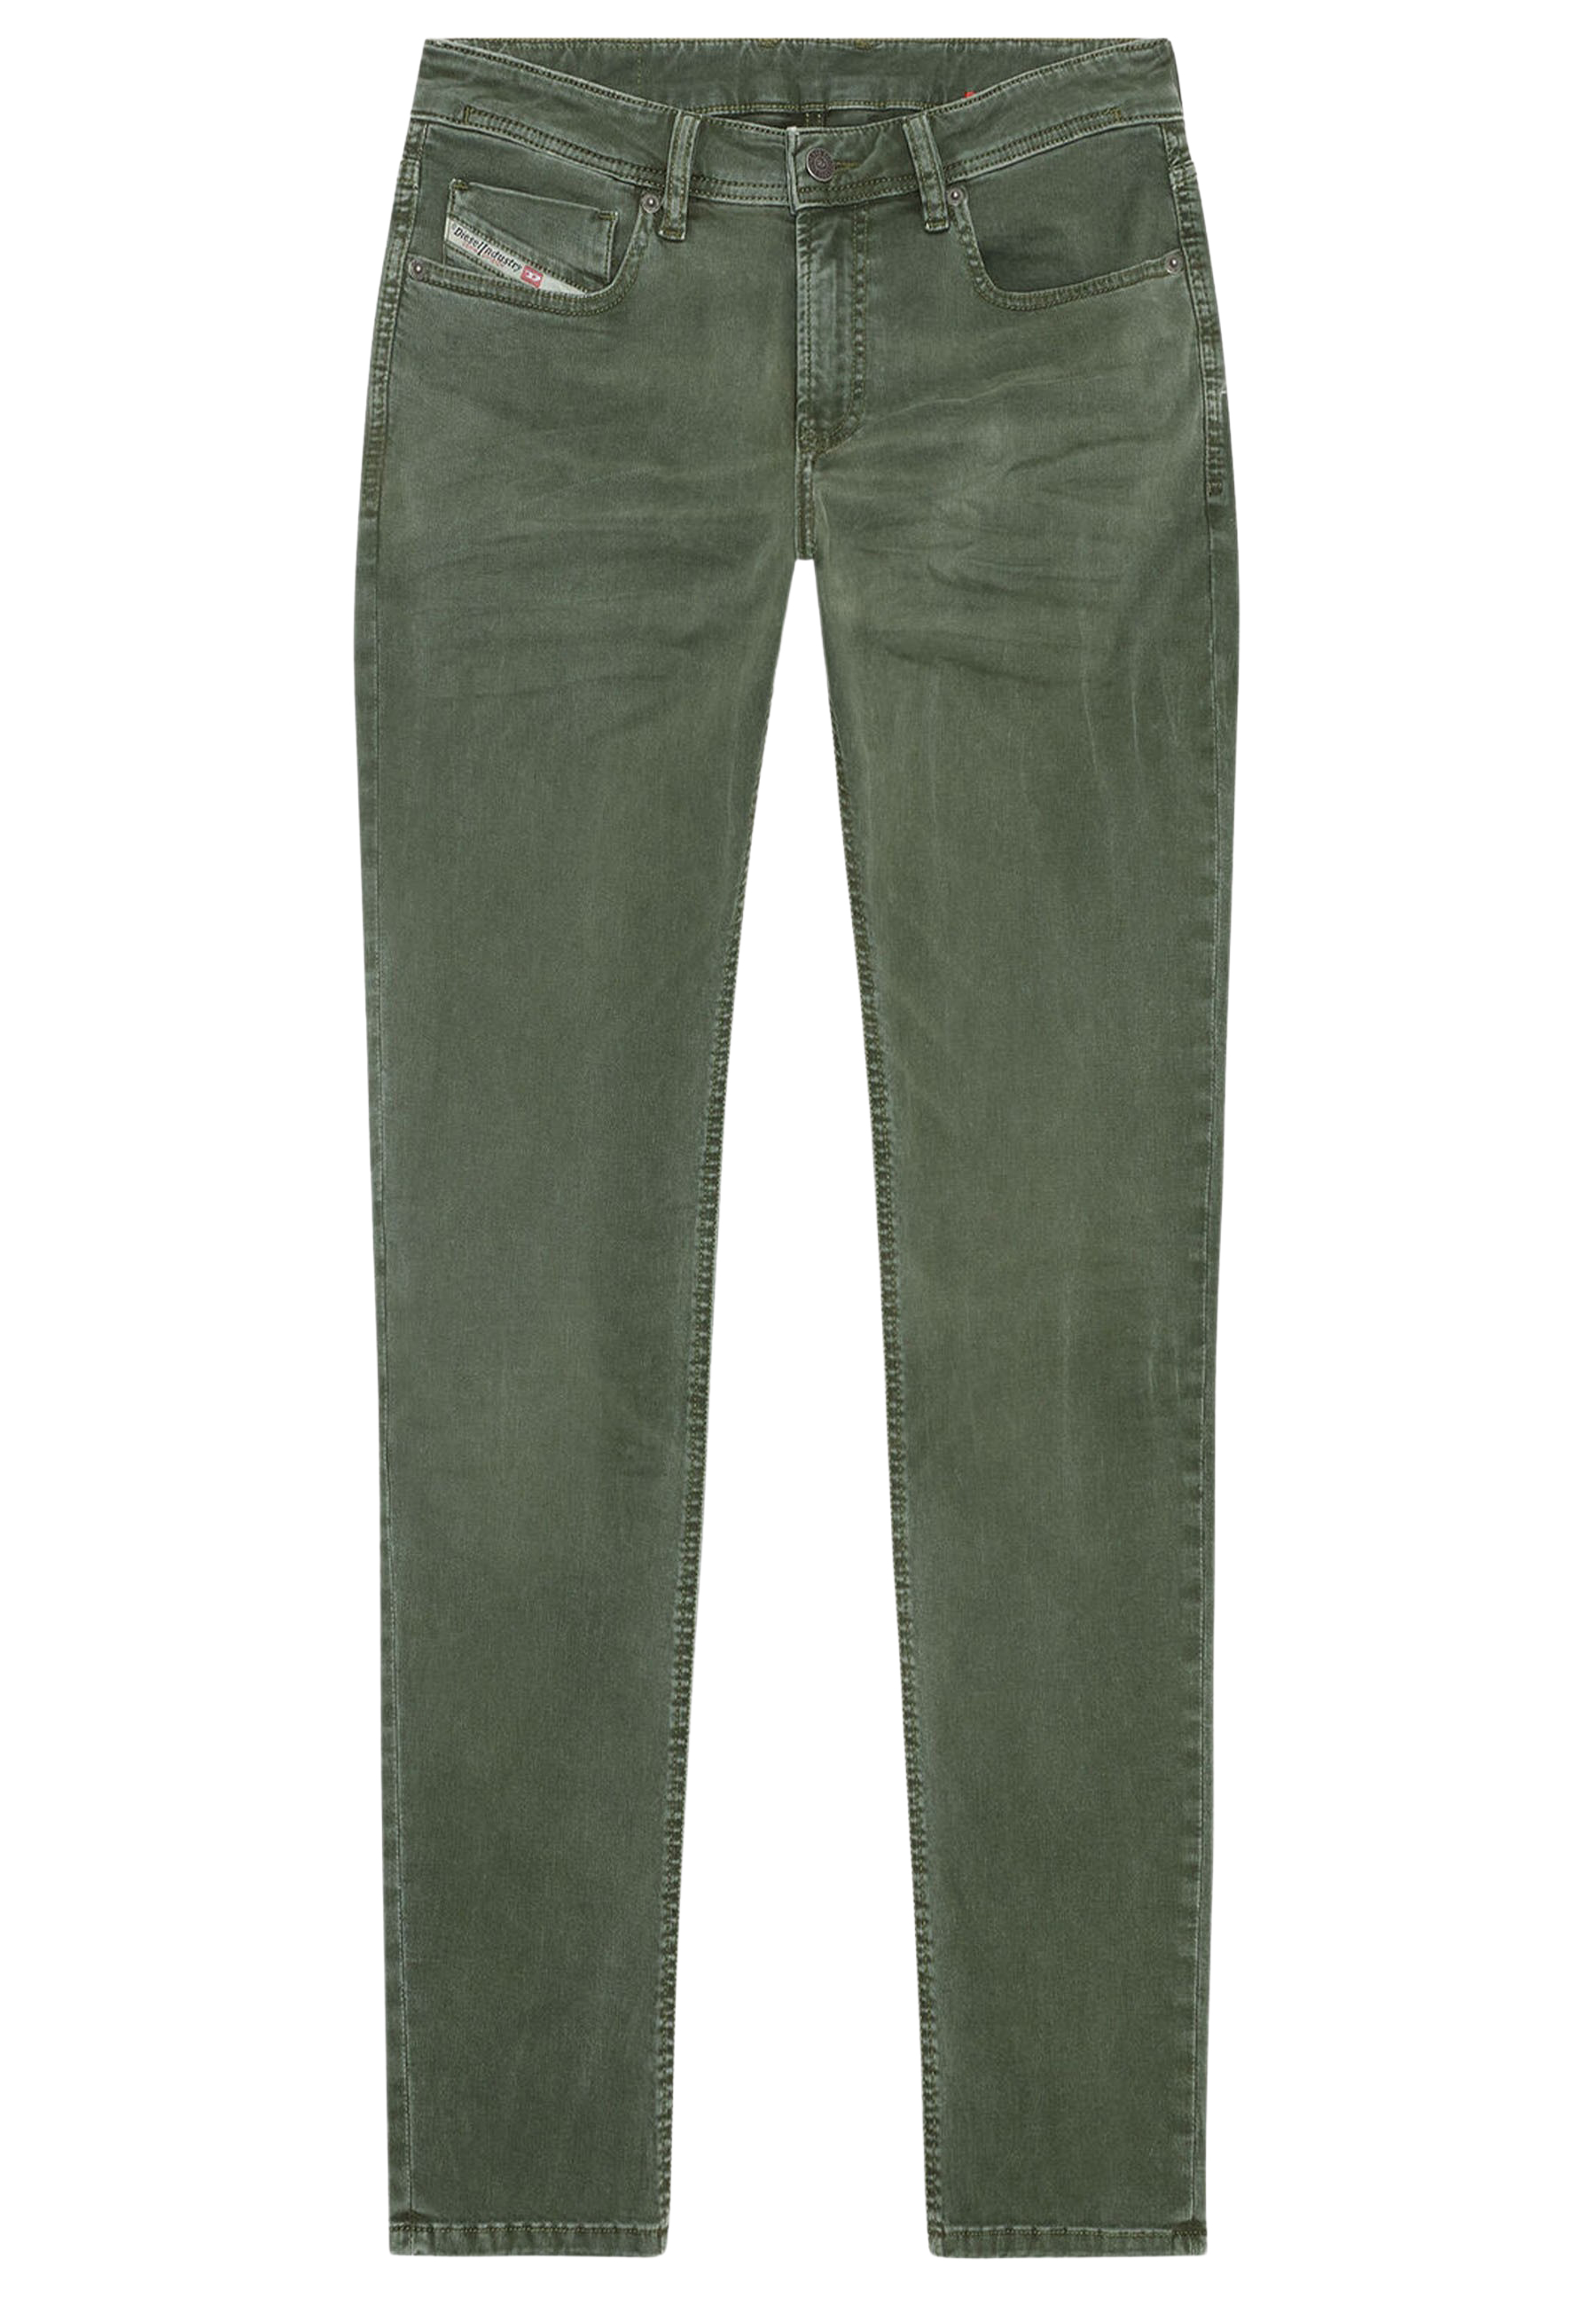 Diesel jeans groen Heren maat 30/32